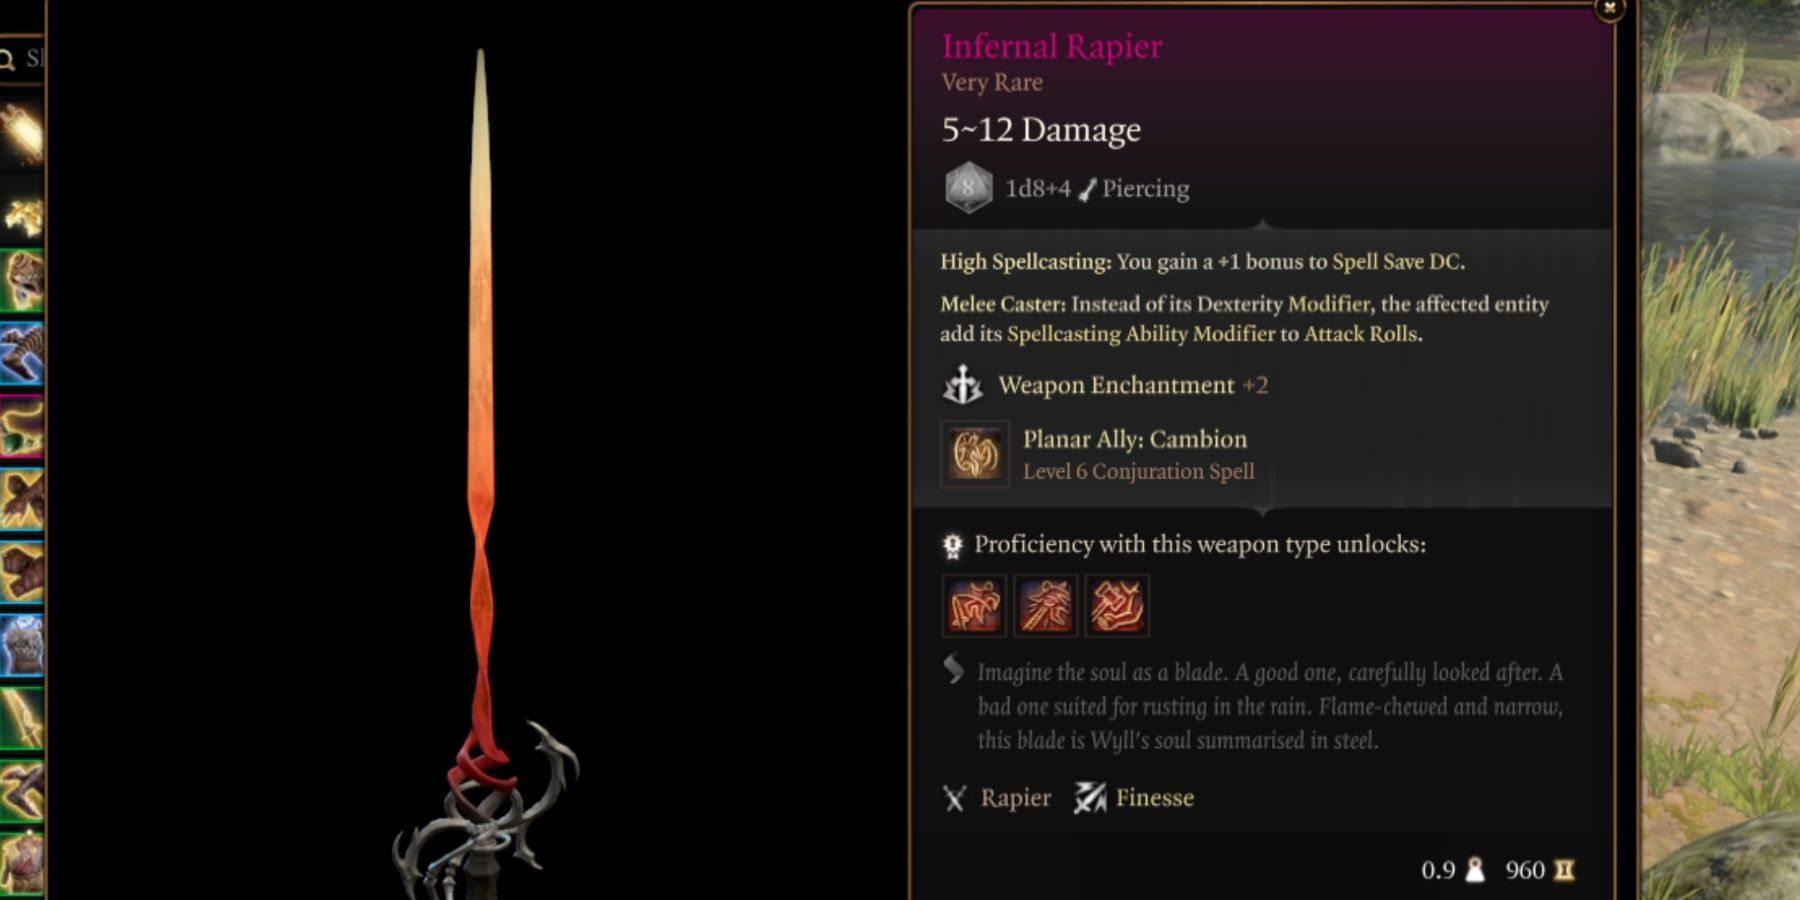 BG3 Infernal Rapier in-game item menu description